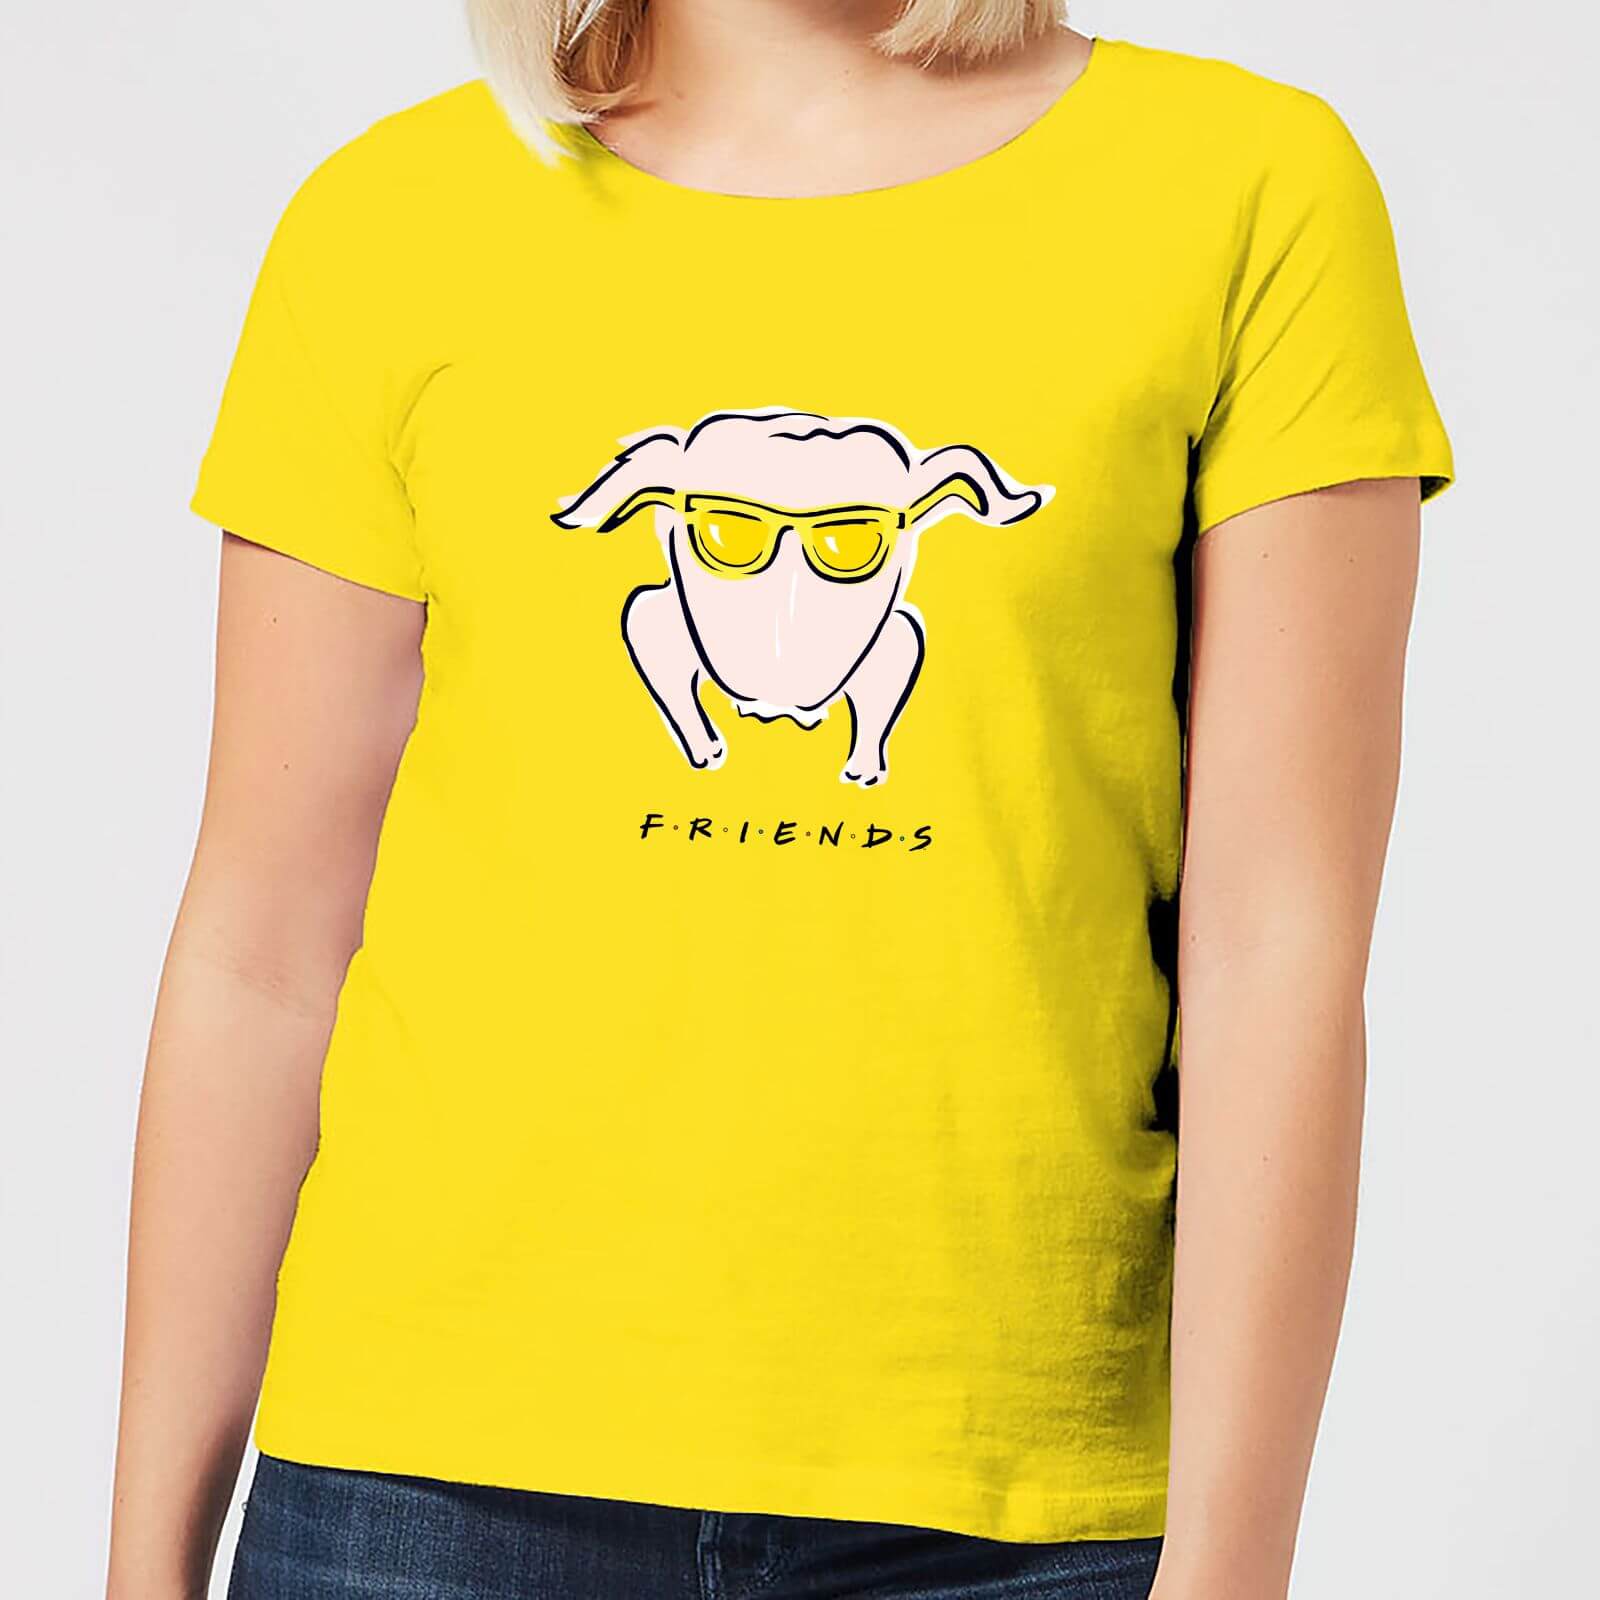 Friends Turkey Women's T-Shirt - Yellow - S